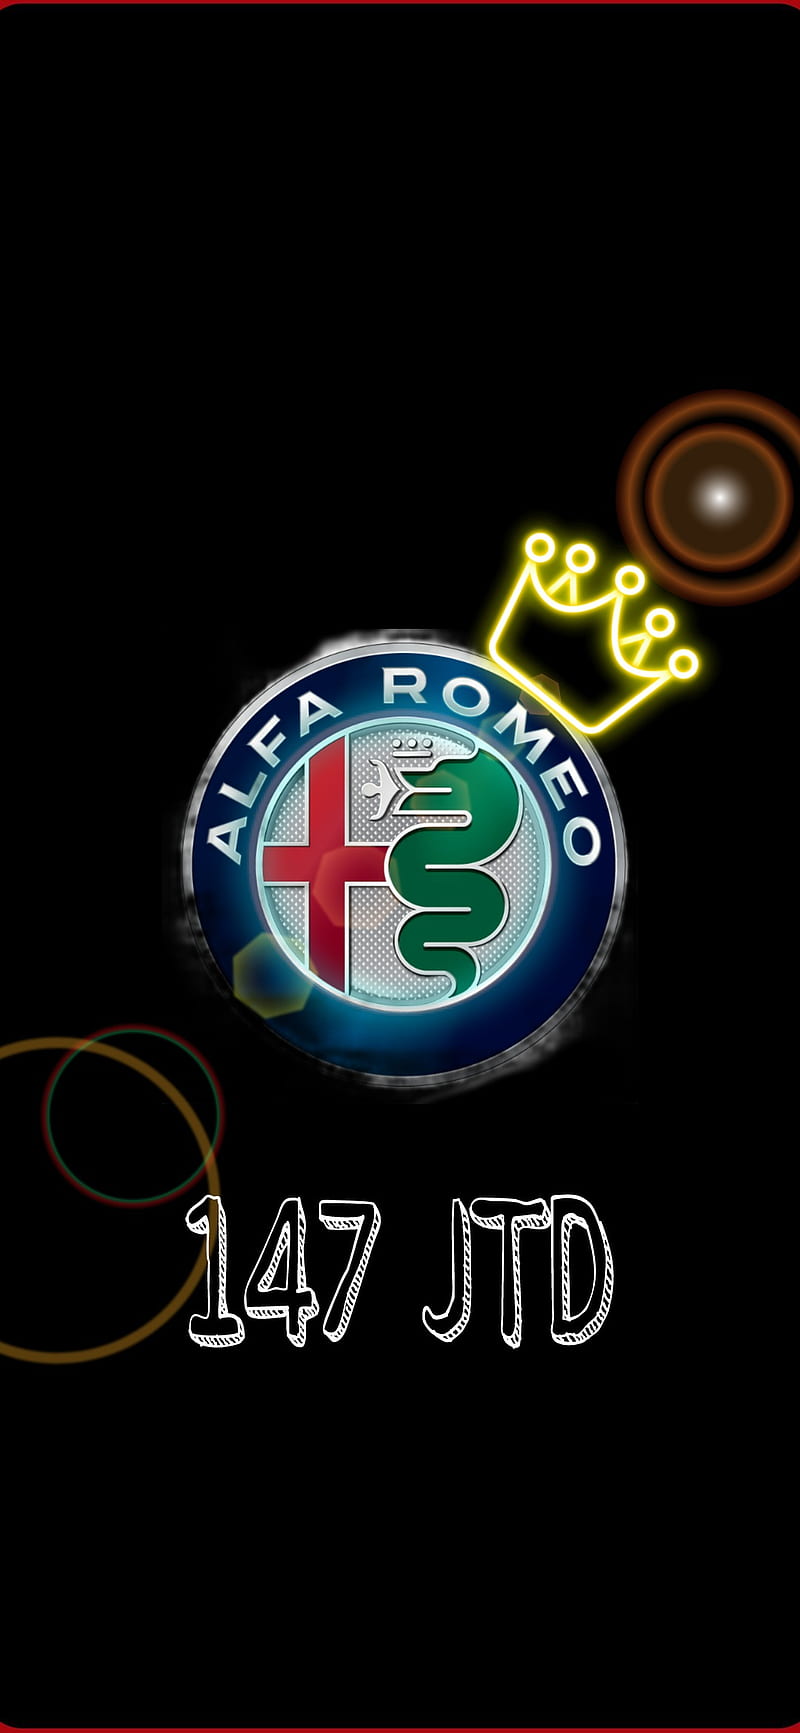 ALFA ROMEO 147 JTD, agents, compass, converse, new, shield, shields, star, teams, guerra, world, HD phone wallpaper